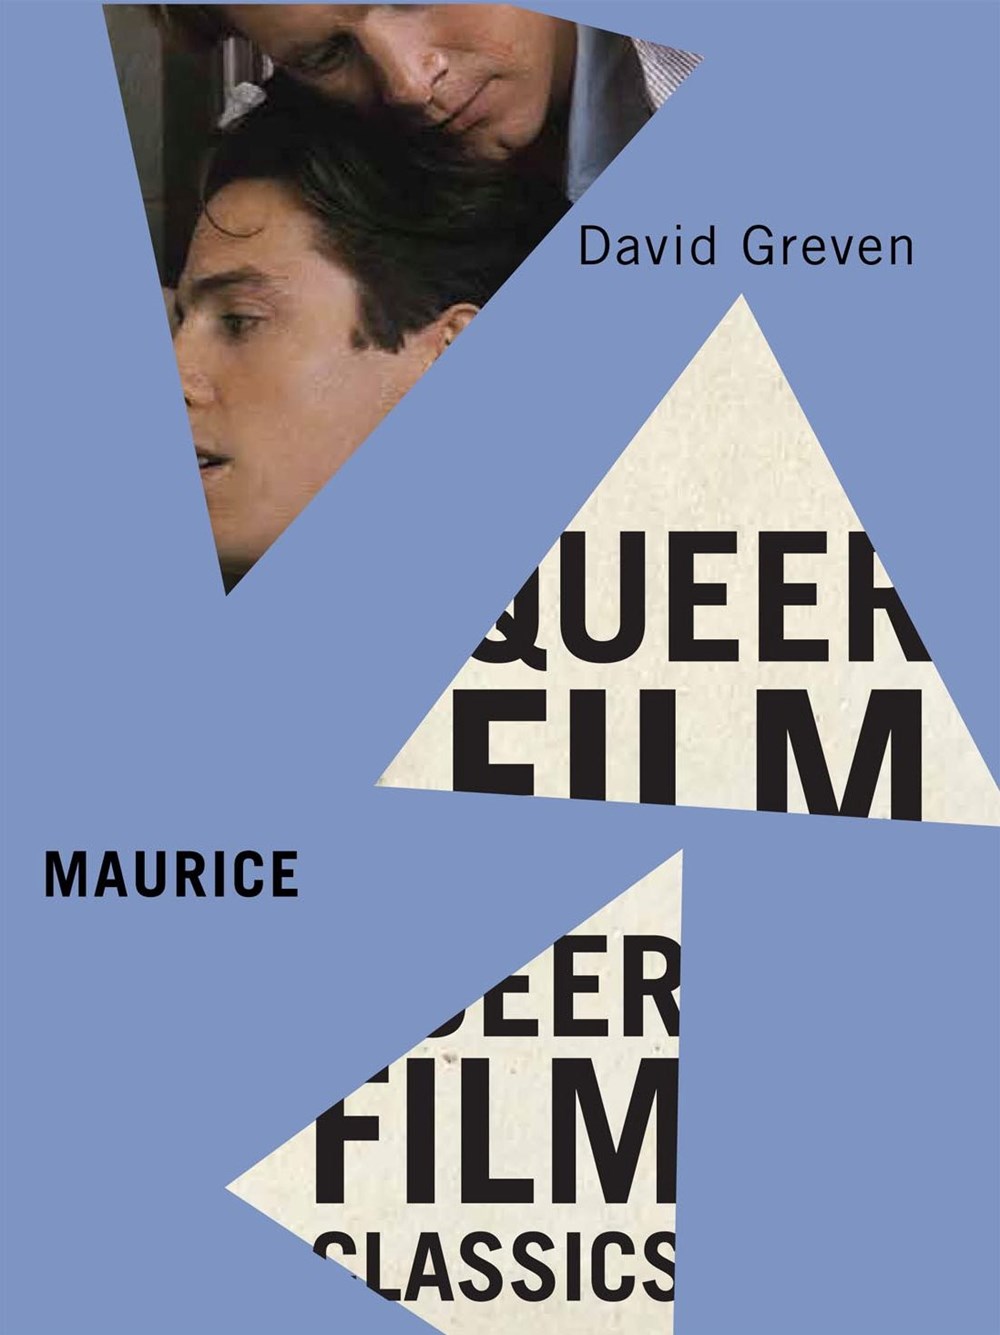 Gay TV and Film Classics